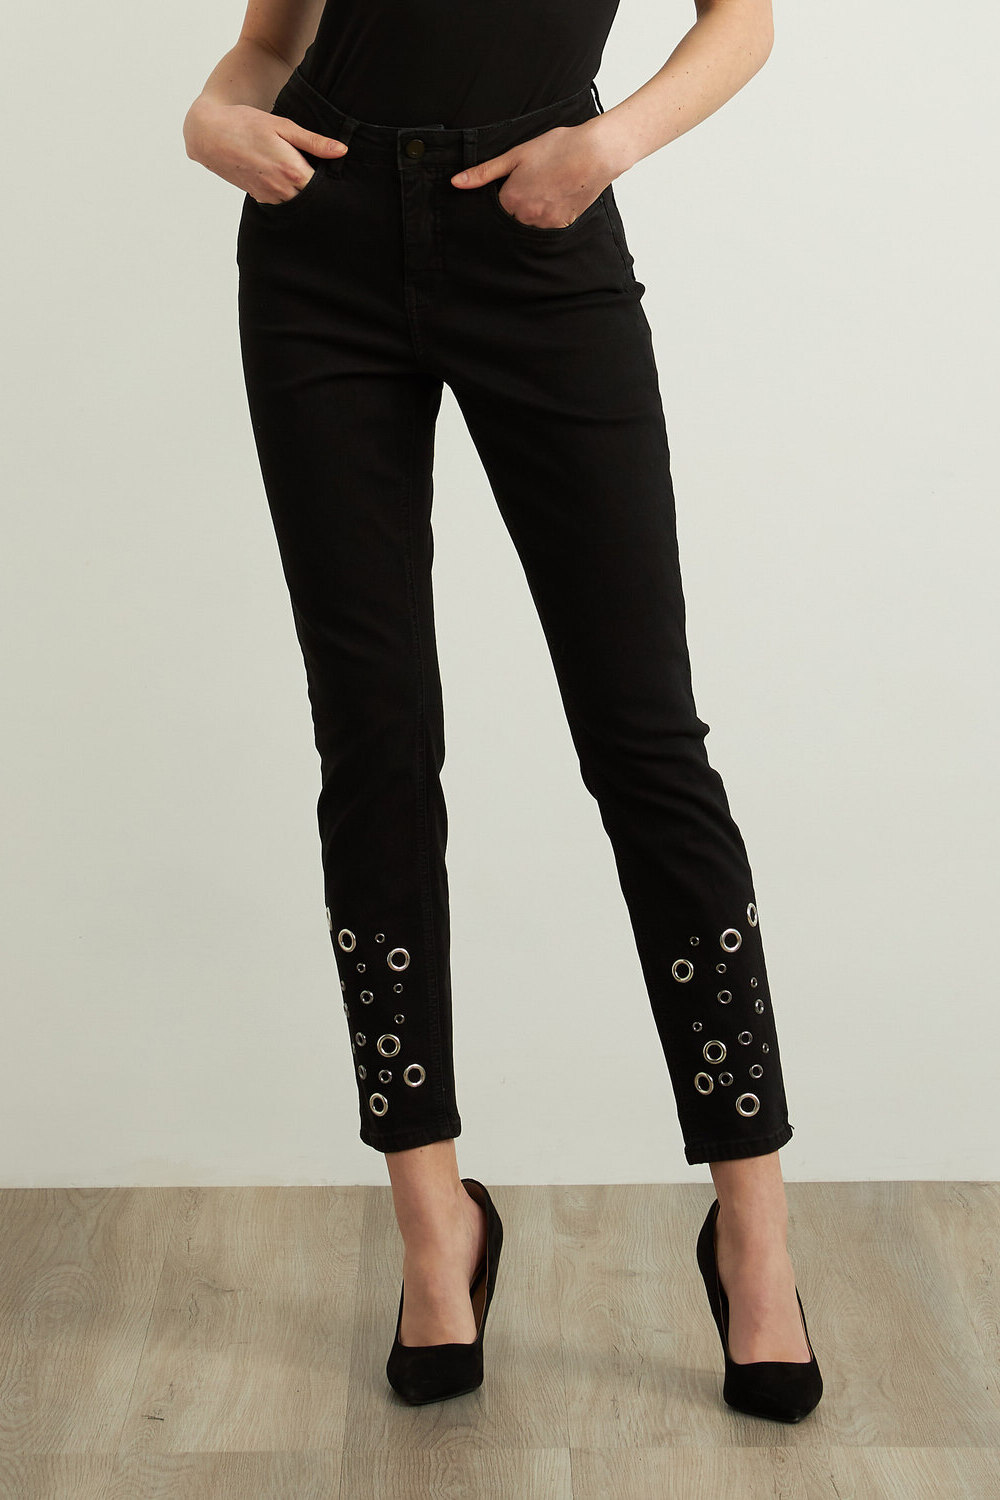 Joseph Ribkoff Grommet Detail Jeans Style 213917. Black